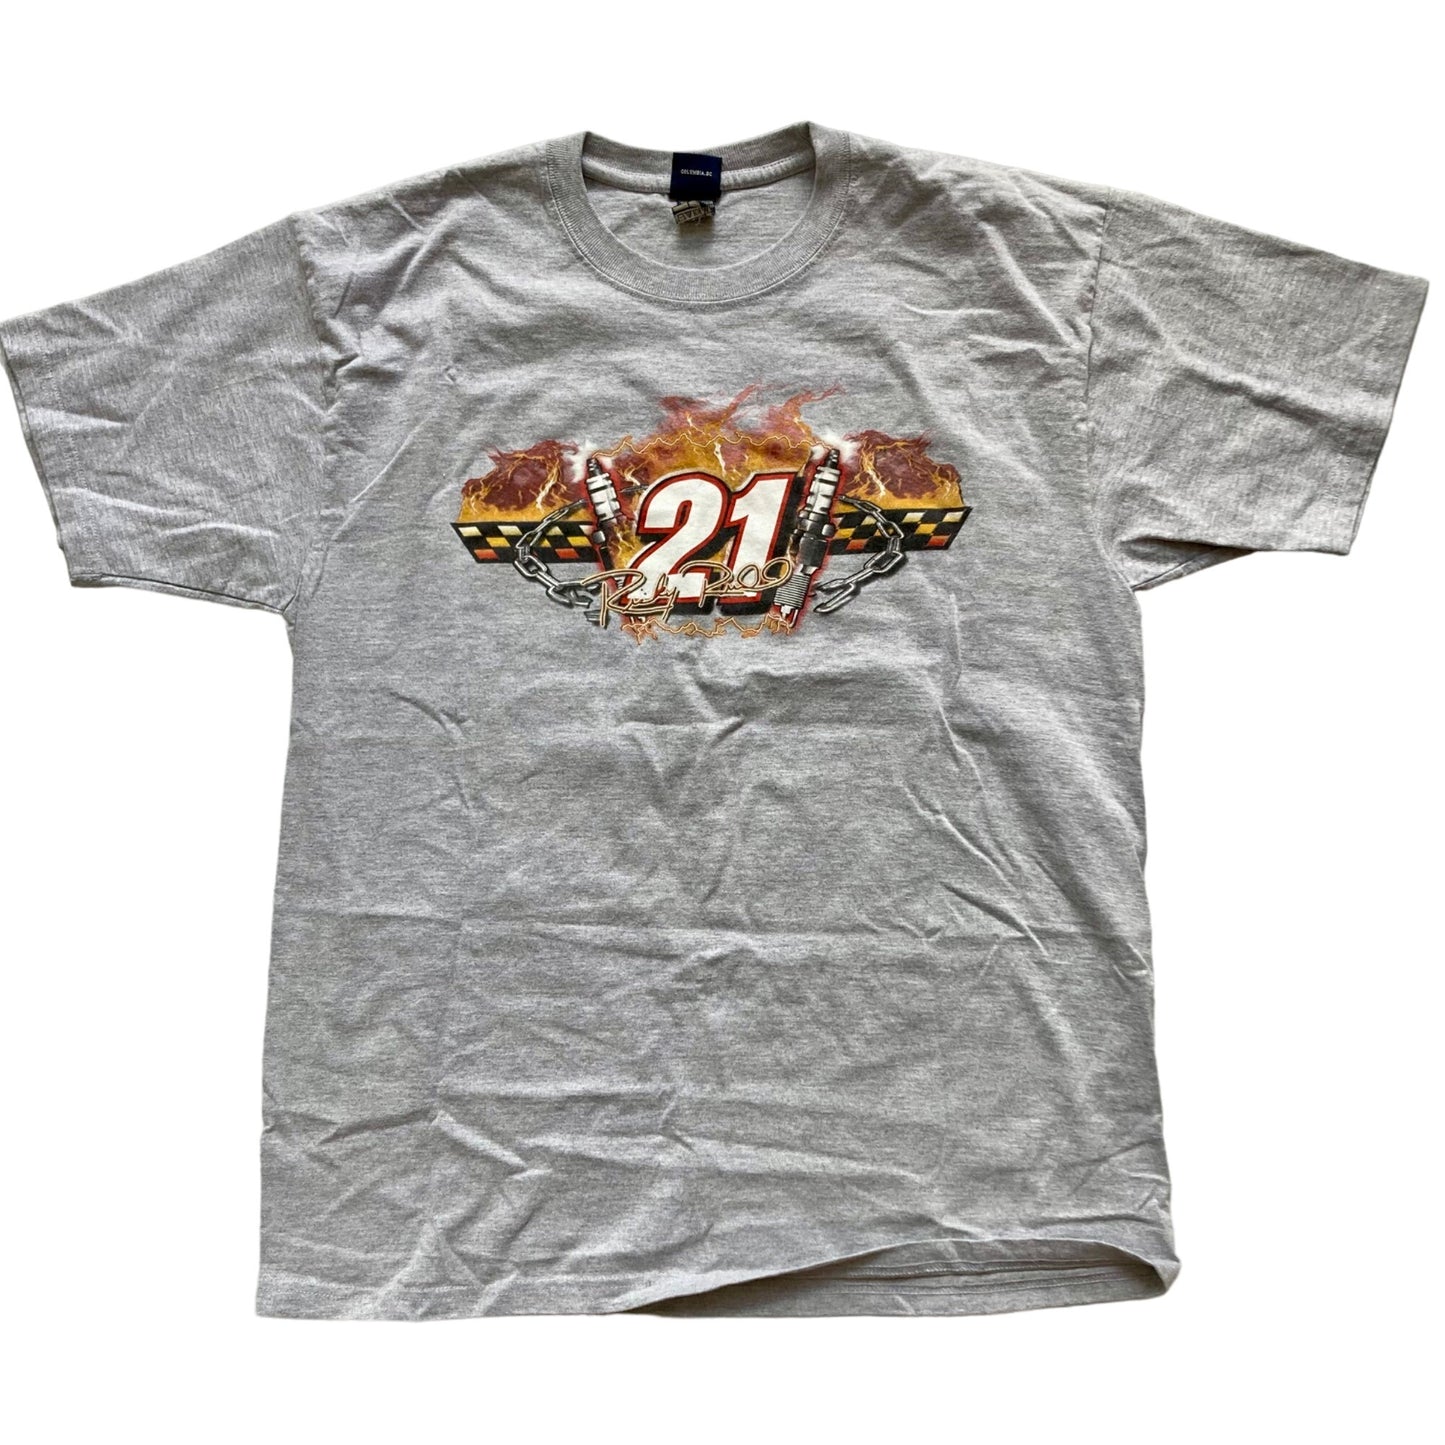 Vintage NASCAR Ricky Rudd #21 Motorcraft Racing T-Shirt Men's L NICE!